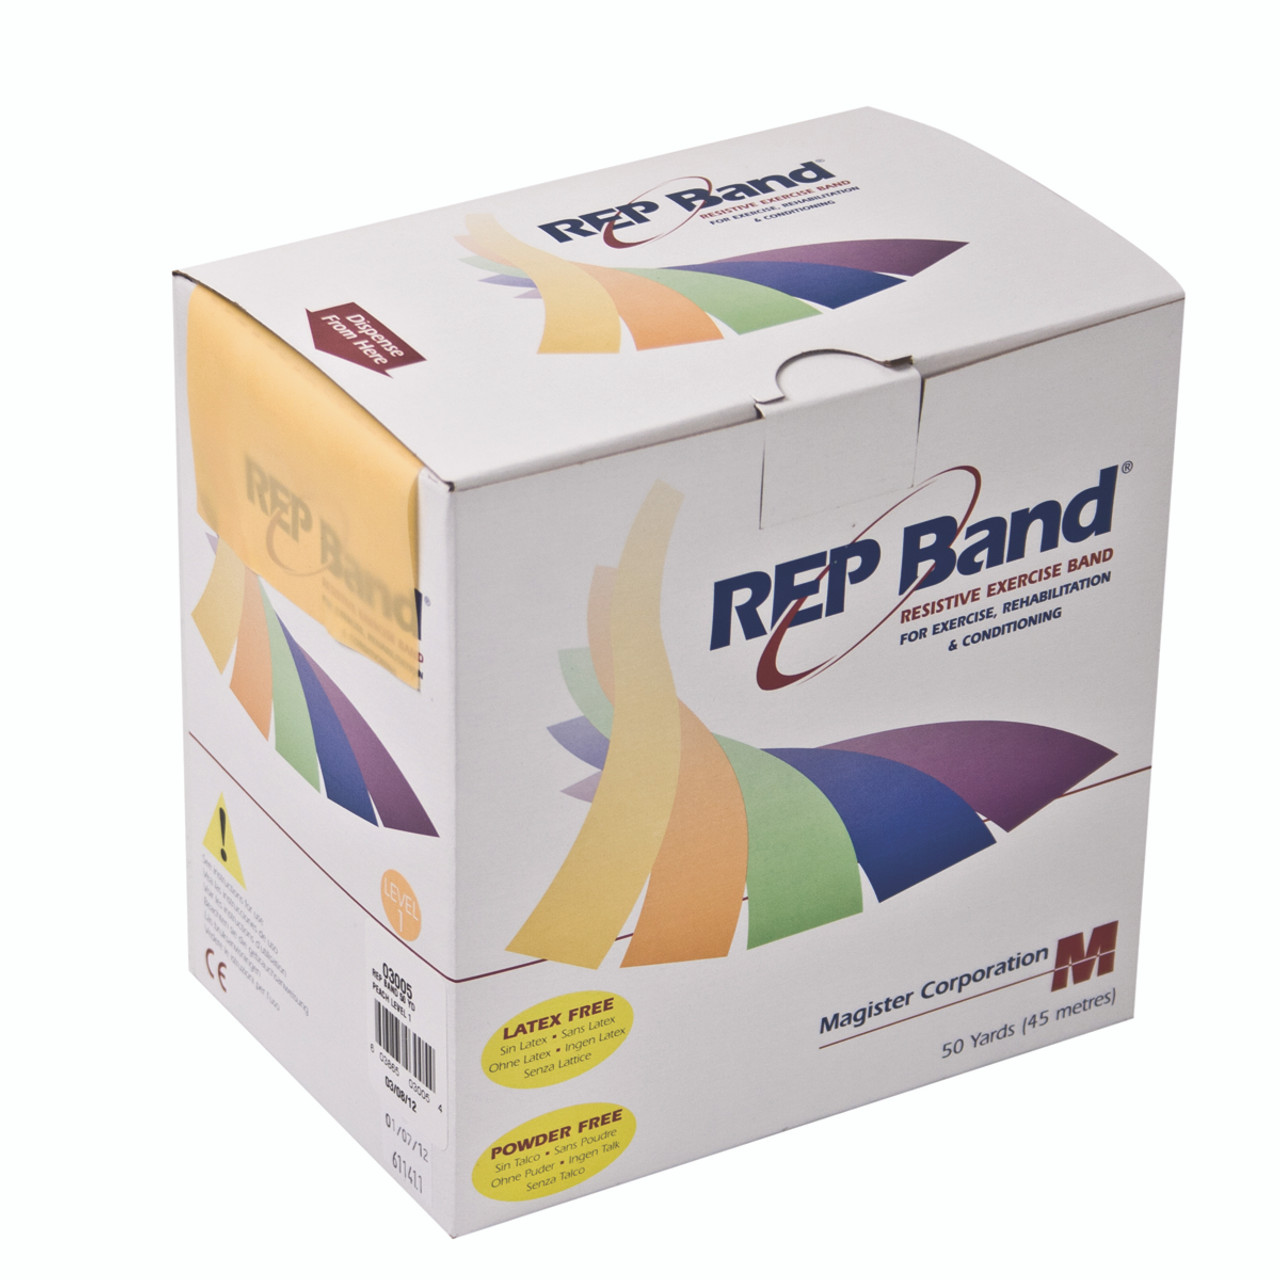 REP Band¨ exercise band - latex free - 50 yard - peach, level 1